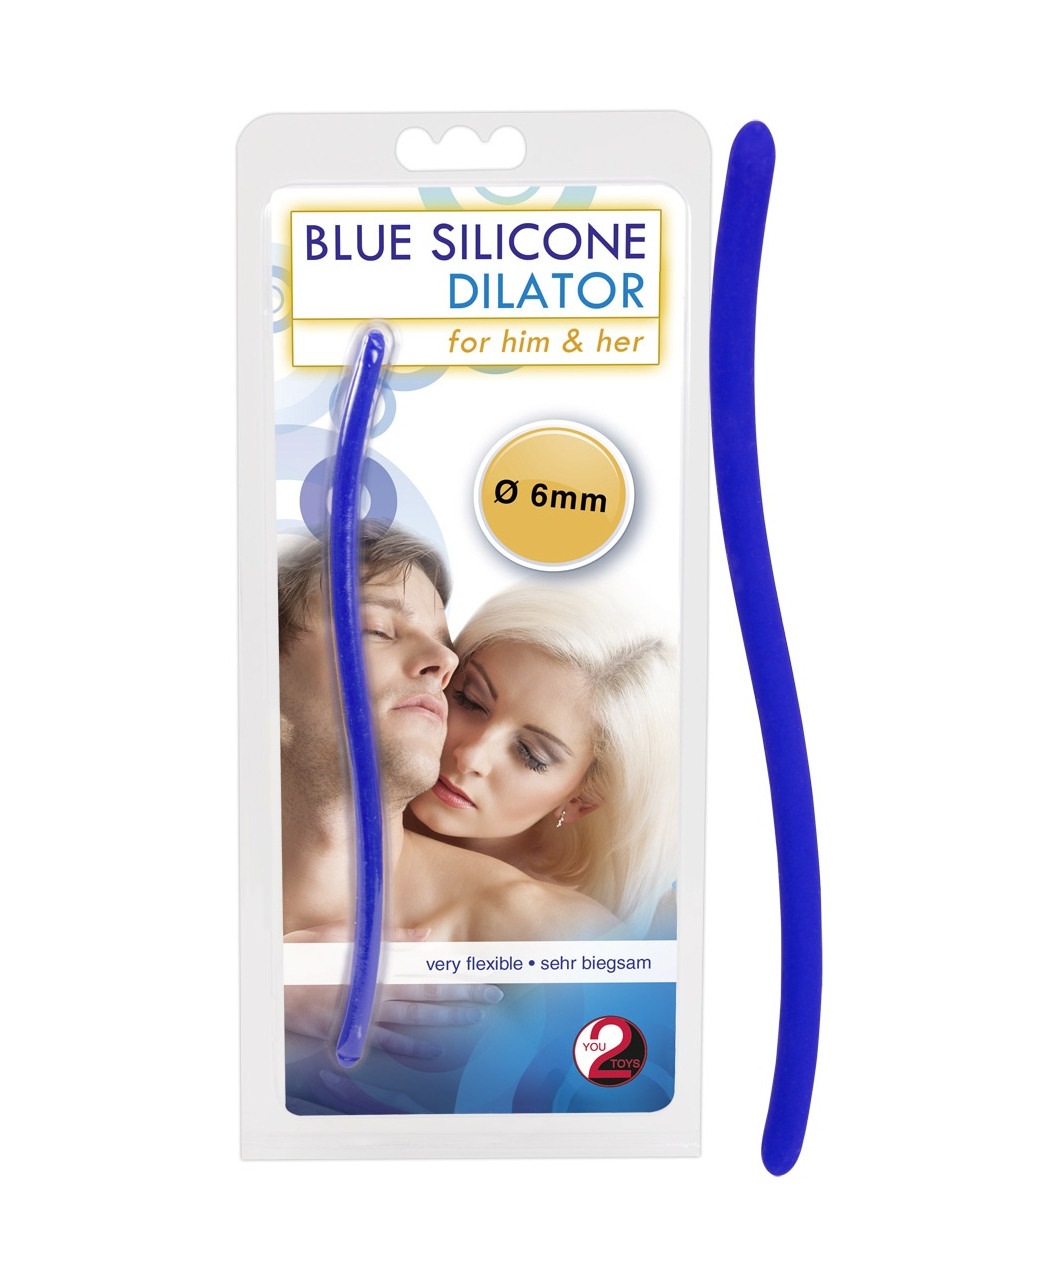 You2Toys Blue Silicone Dilator